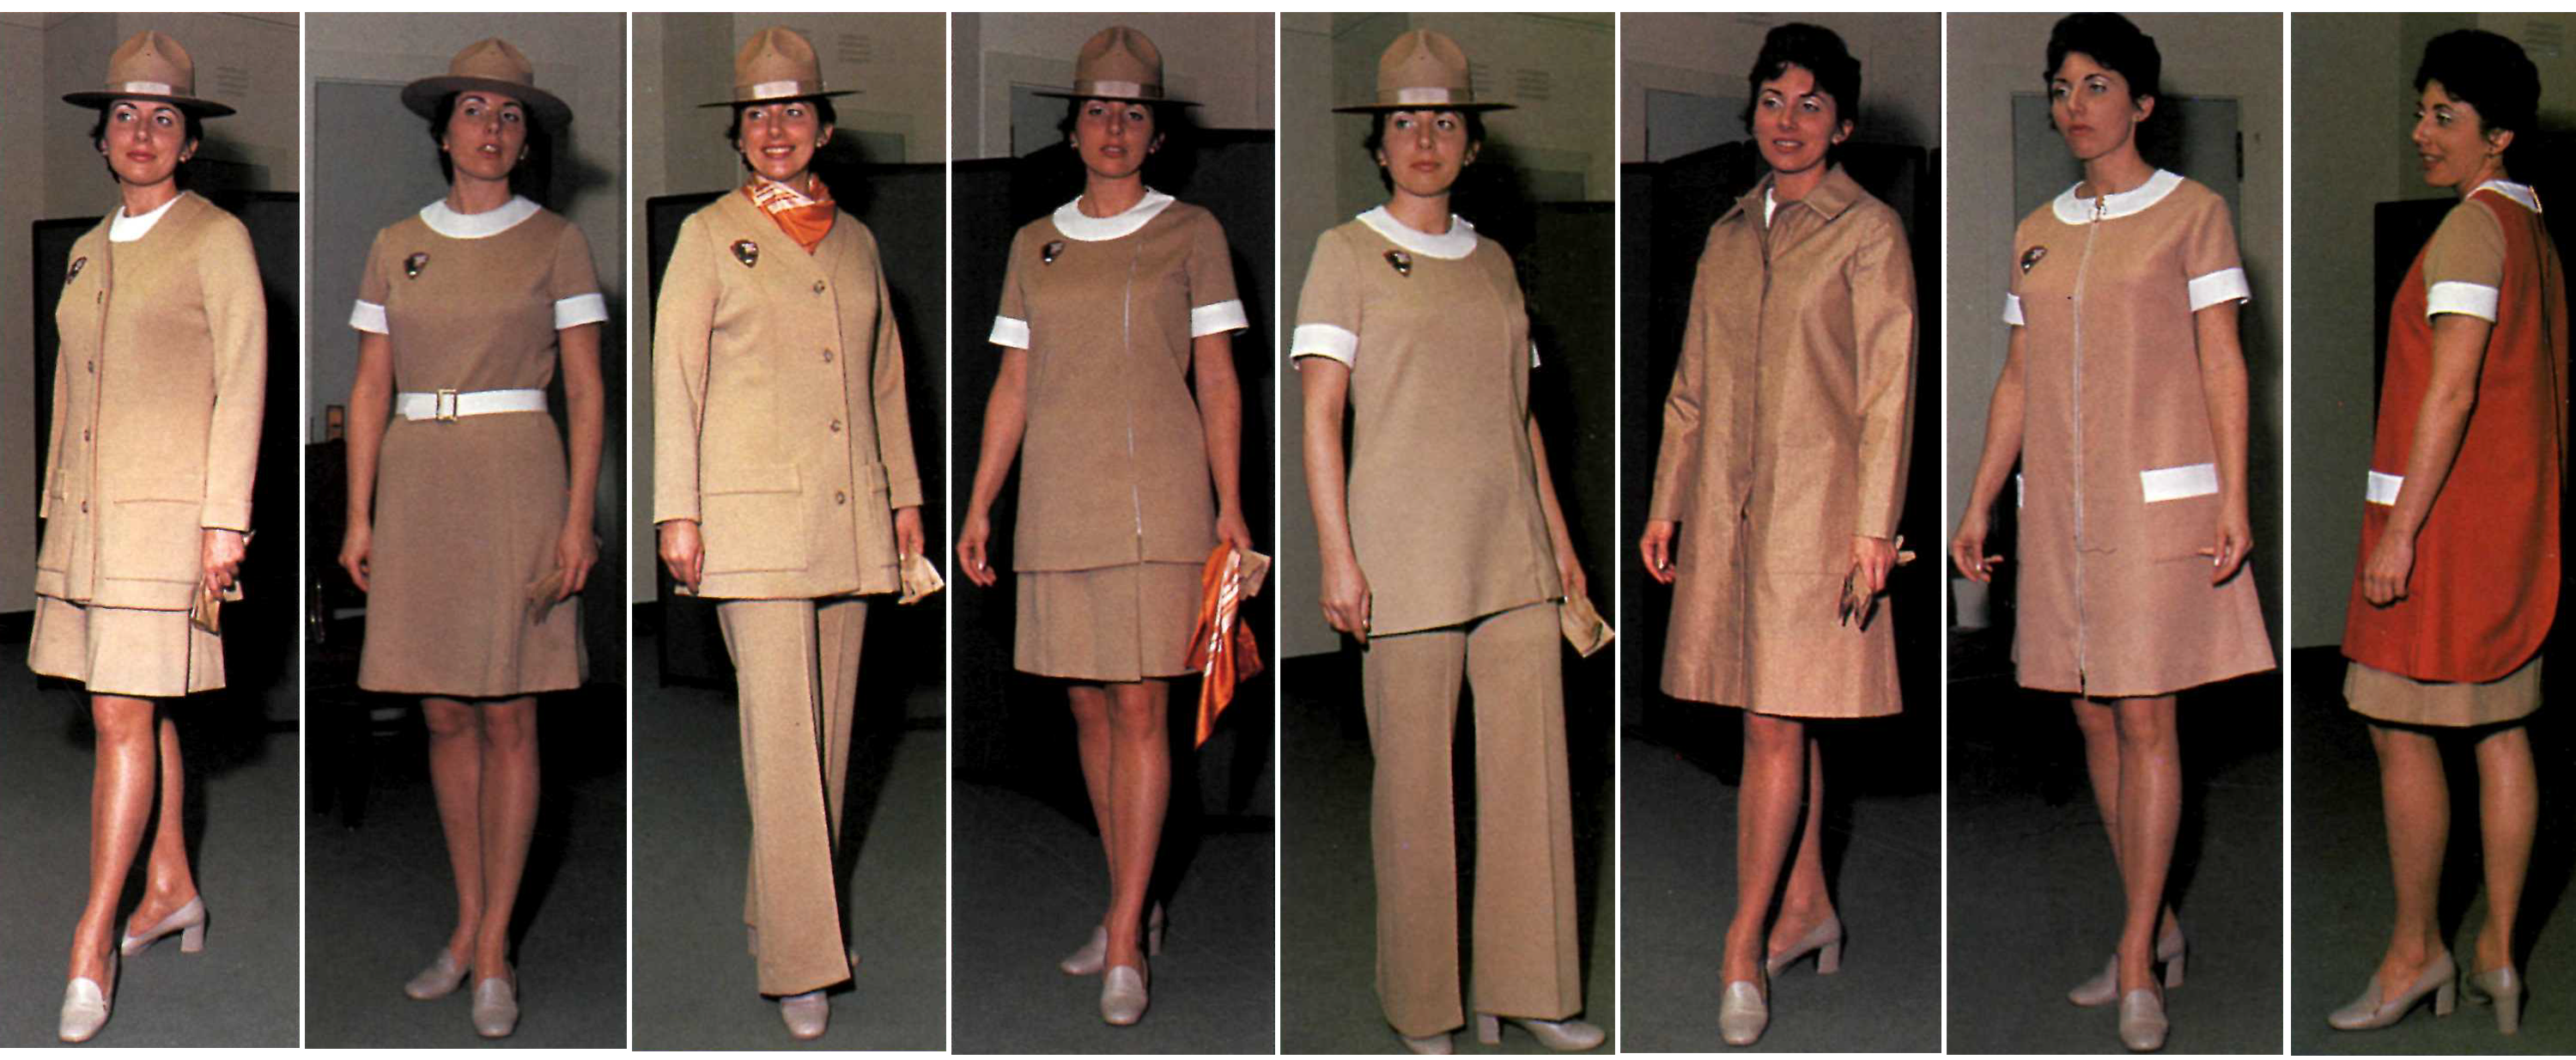 Carol Scanlon modeling 8 beige uniforms